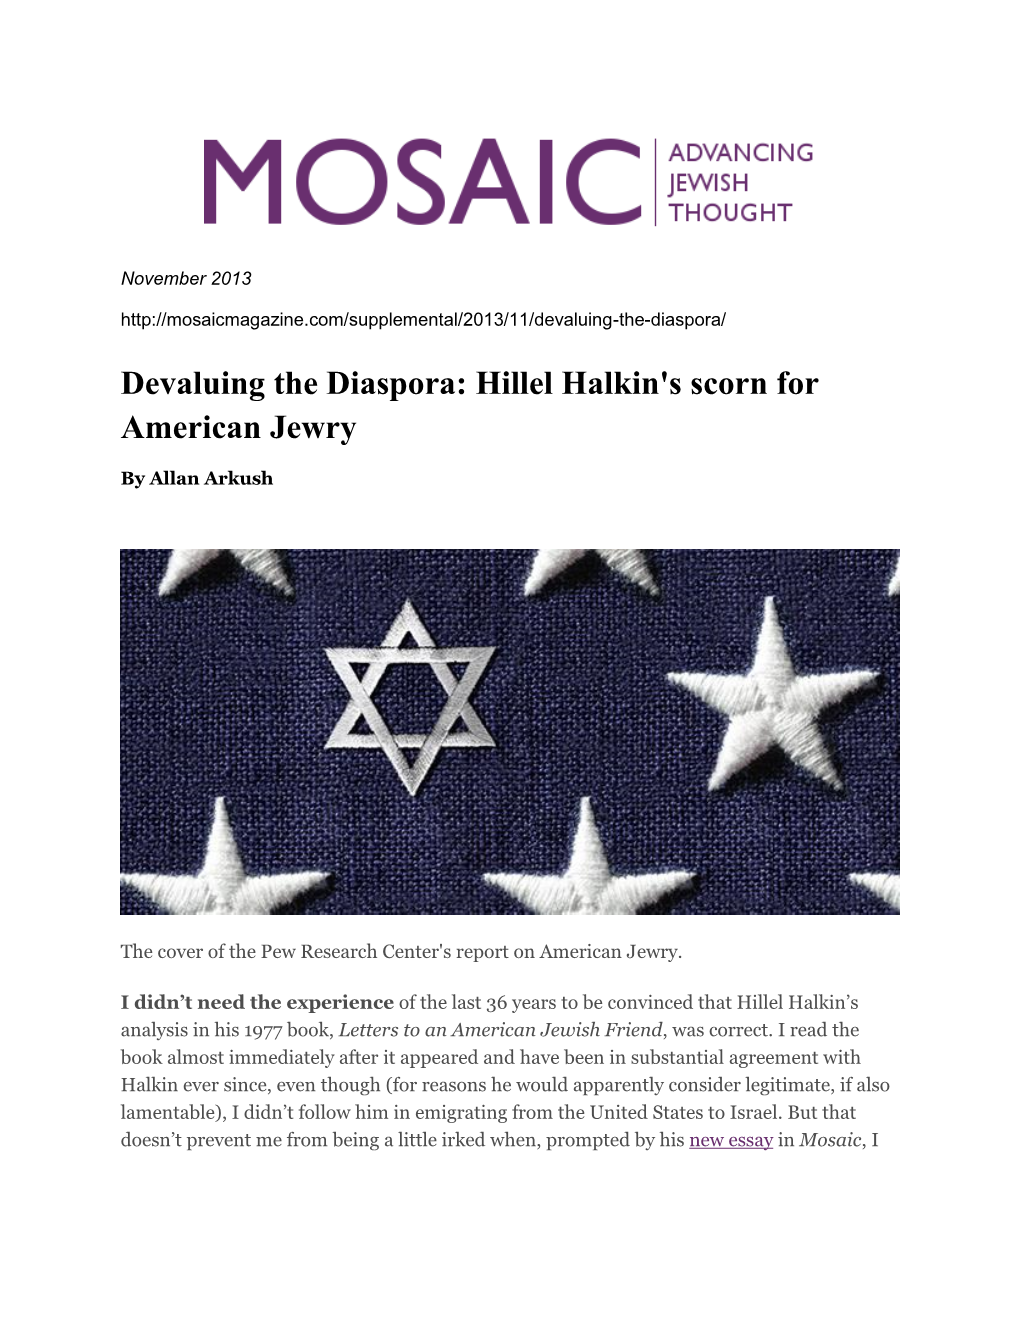 Devaluing the Diaspora: Hillel Halkin's Scorn for American Jewry